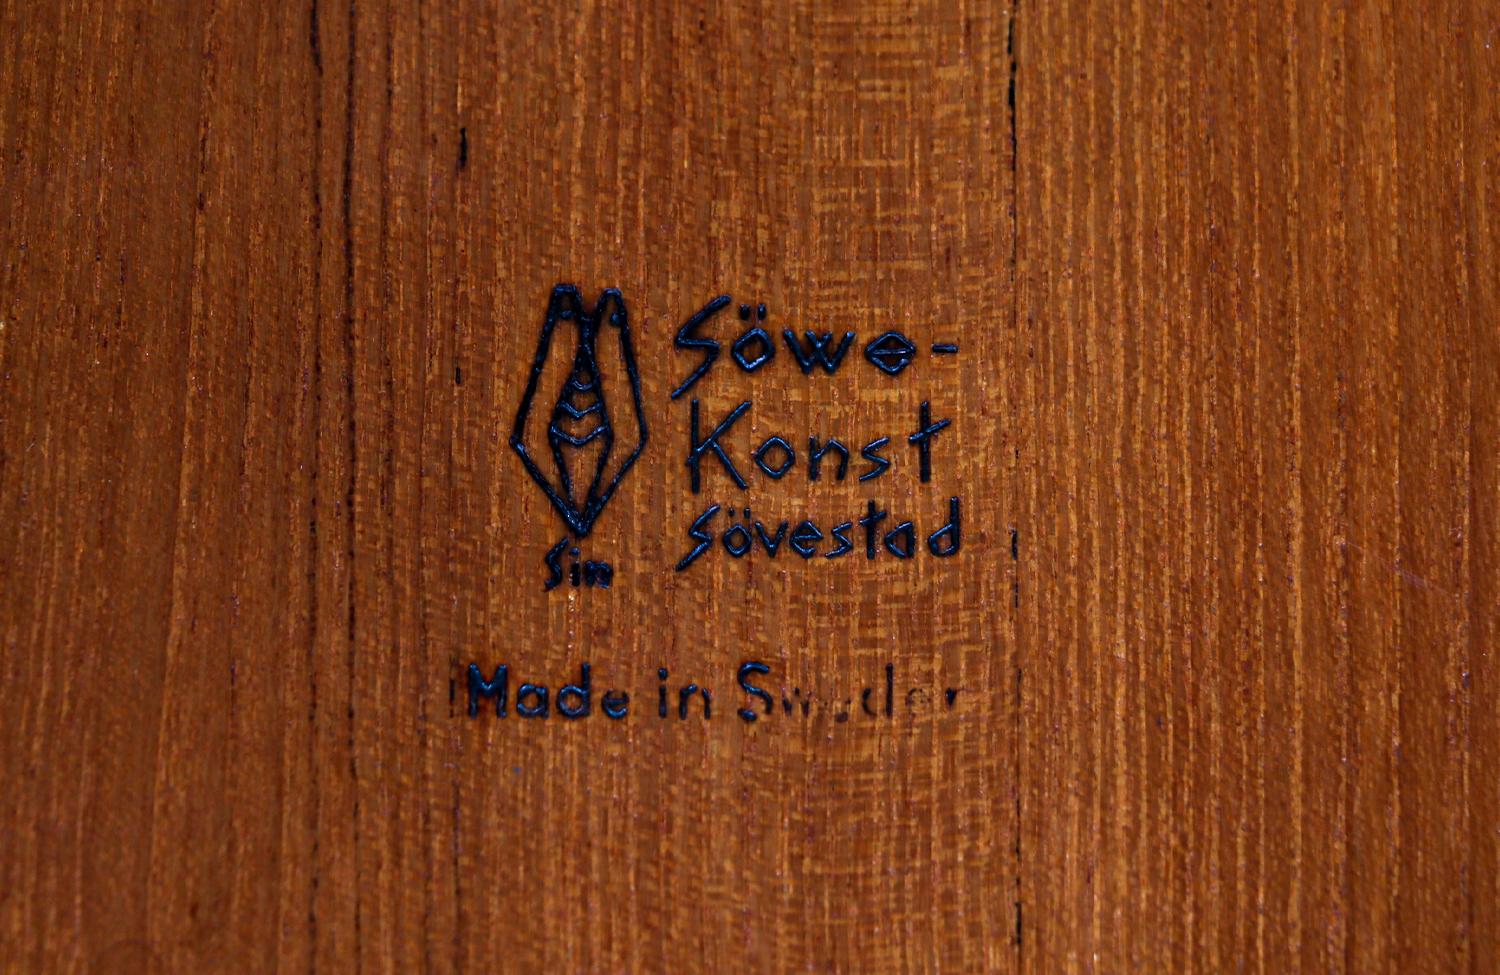 Mid-20th Century Scandinavian Modern Sculpted Teak Tray by Sowe Konst Sovestad